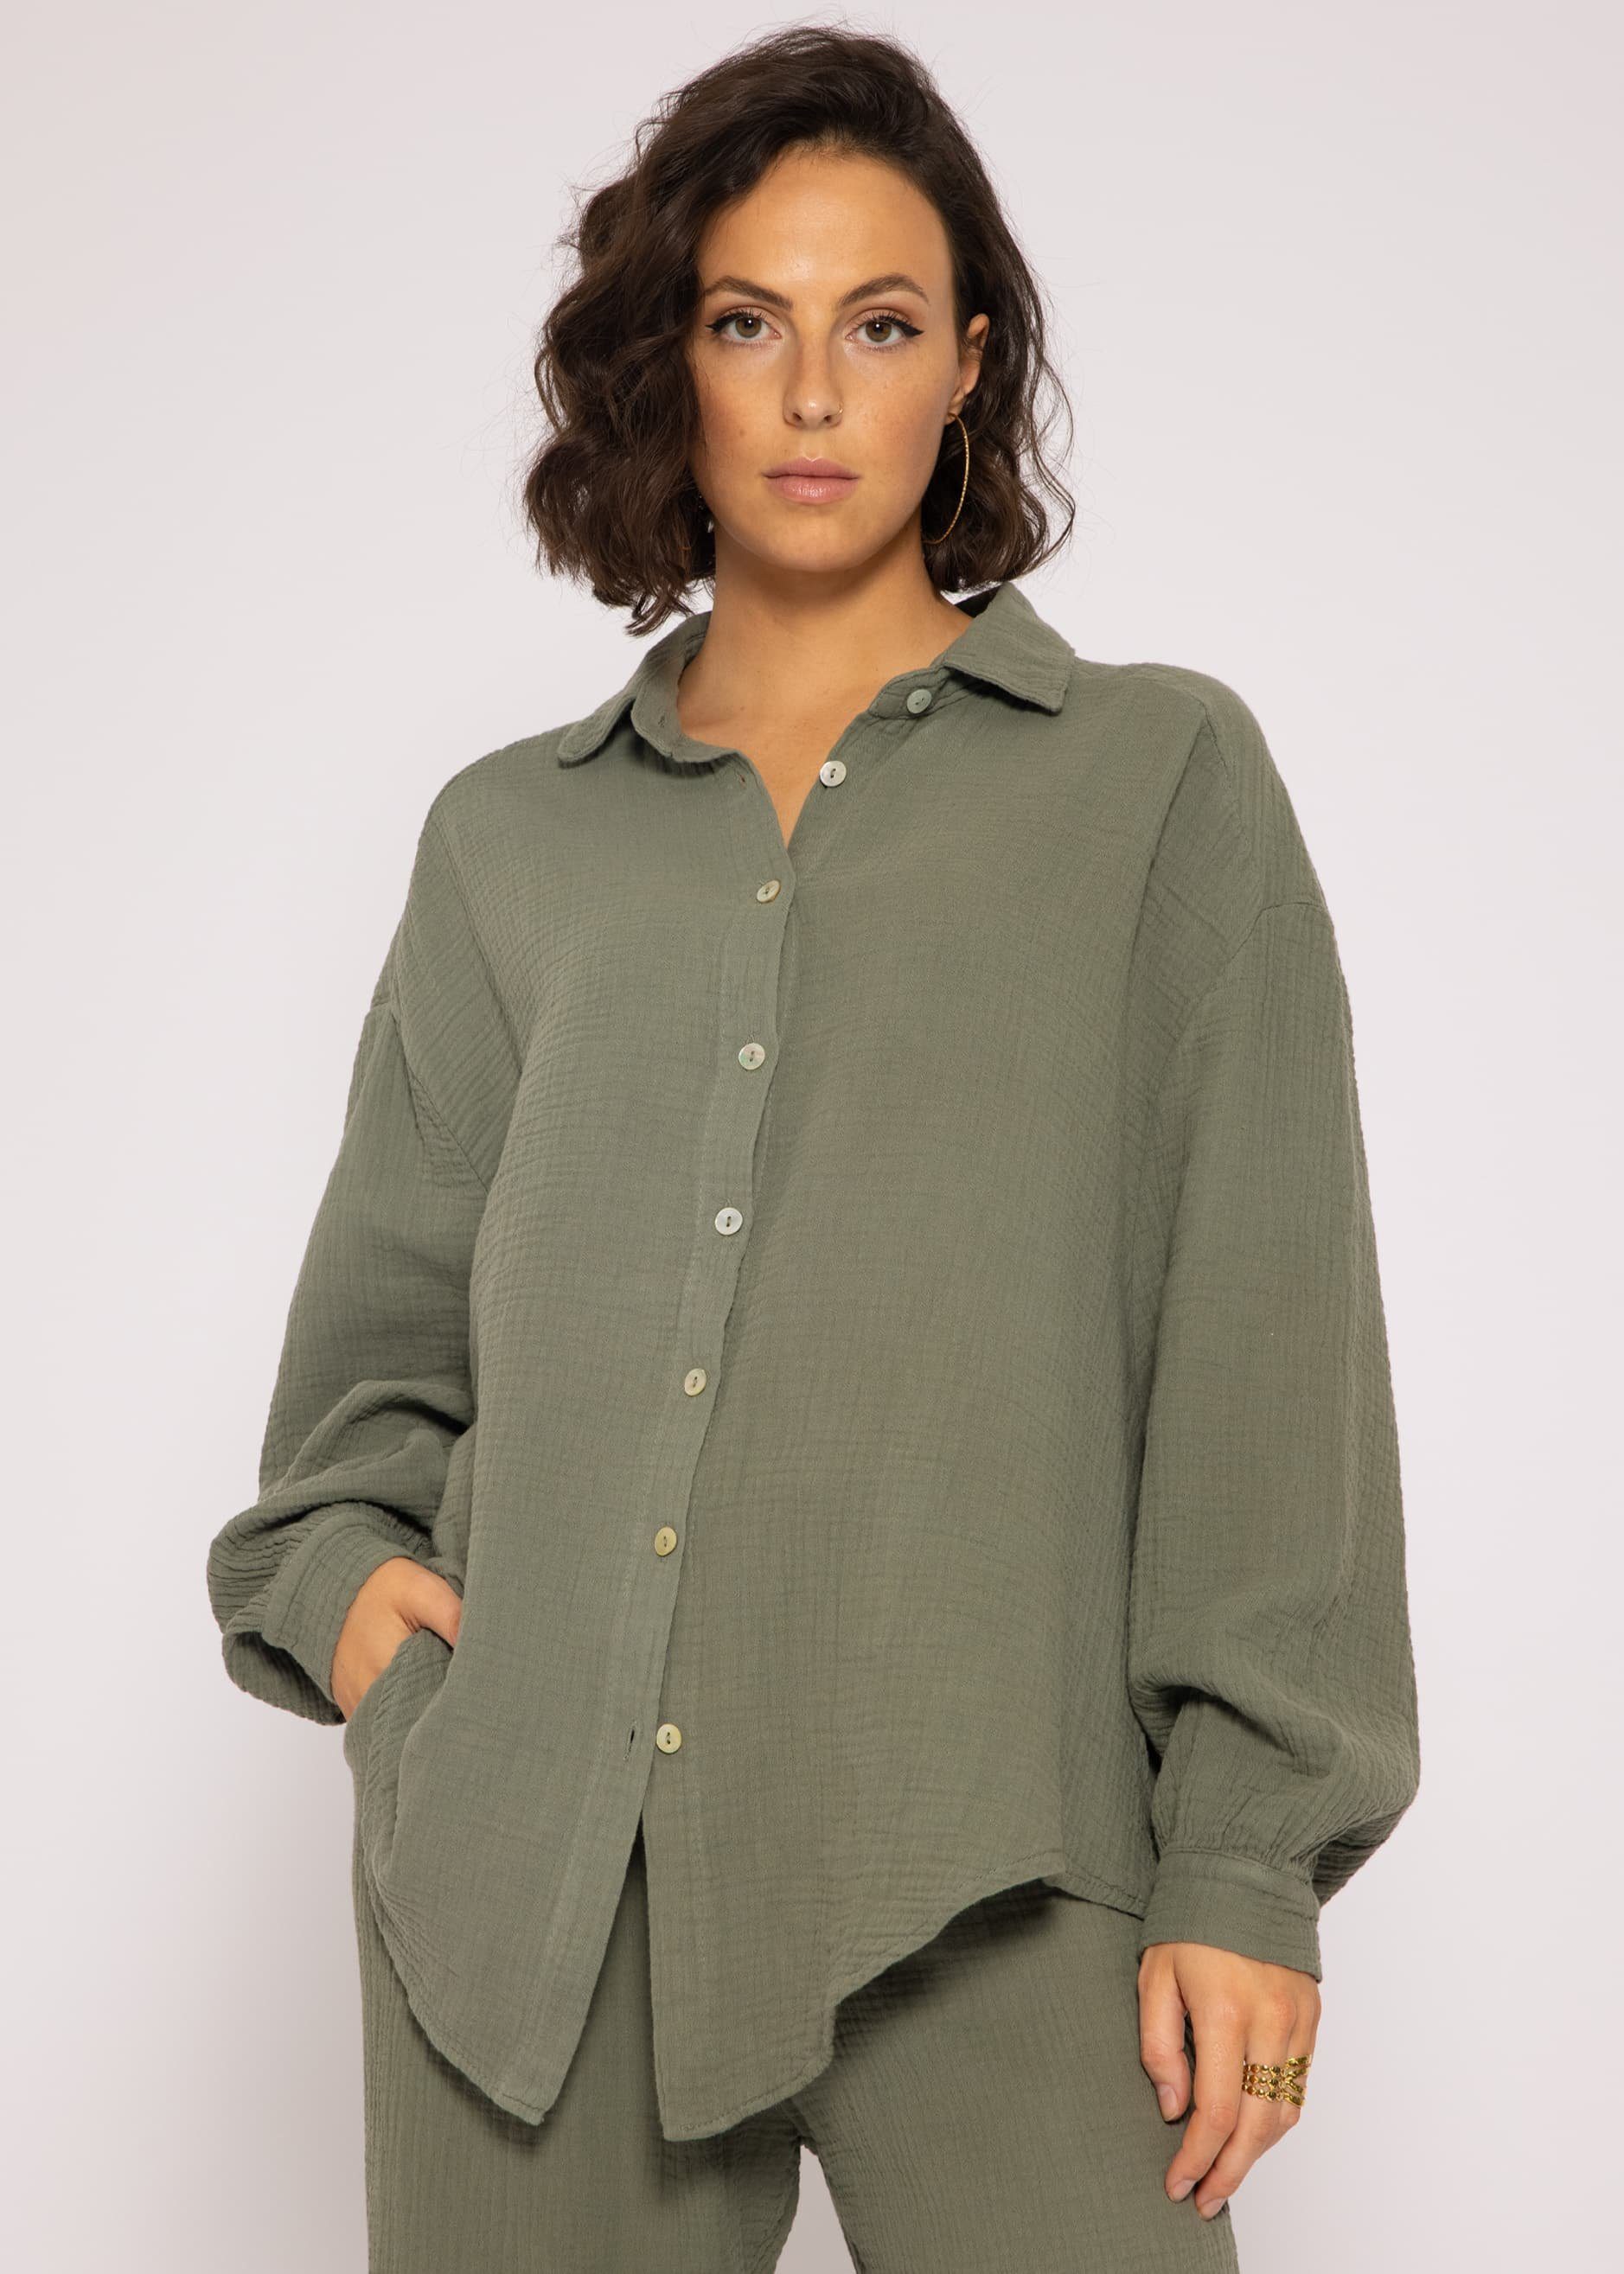 Baumwolle (Gr. Size Oversize aus SASSYCLASSY 36-48) lang V-Ausschnitt, One Damen Khaki mit Longbluse Bluse Langarm Hemdbluse Musselin